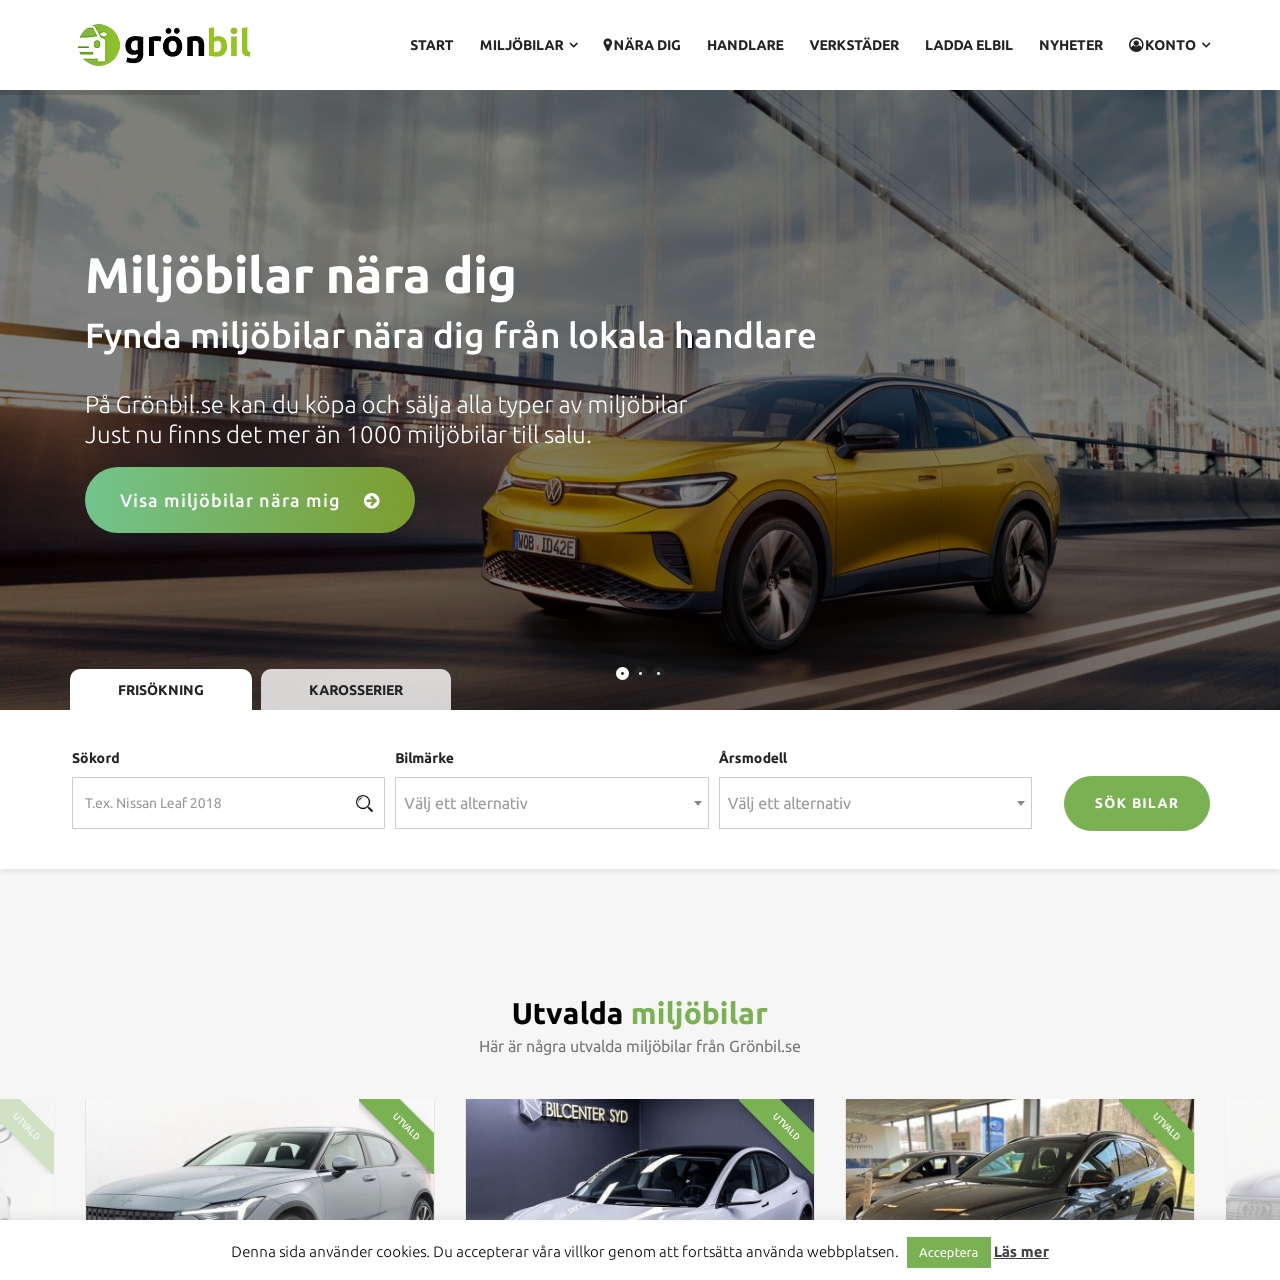 Miljöbilar till salu | Grönbil.se - Sveriges grönaste bilsajt-4